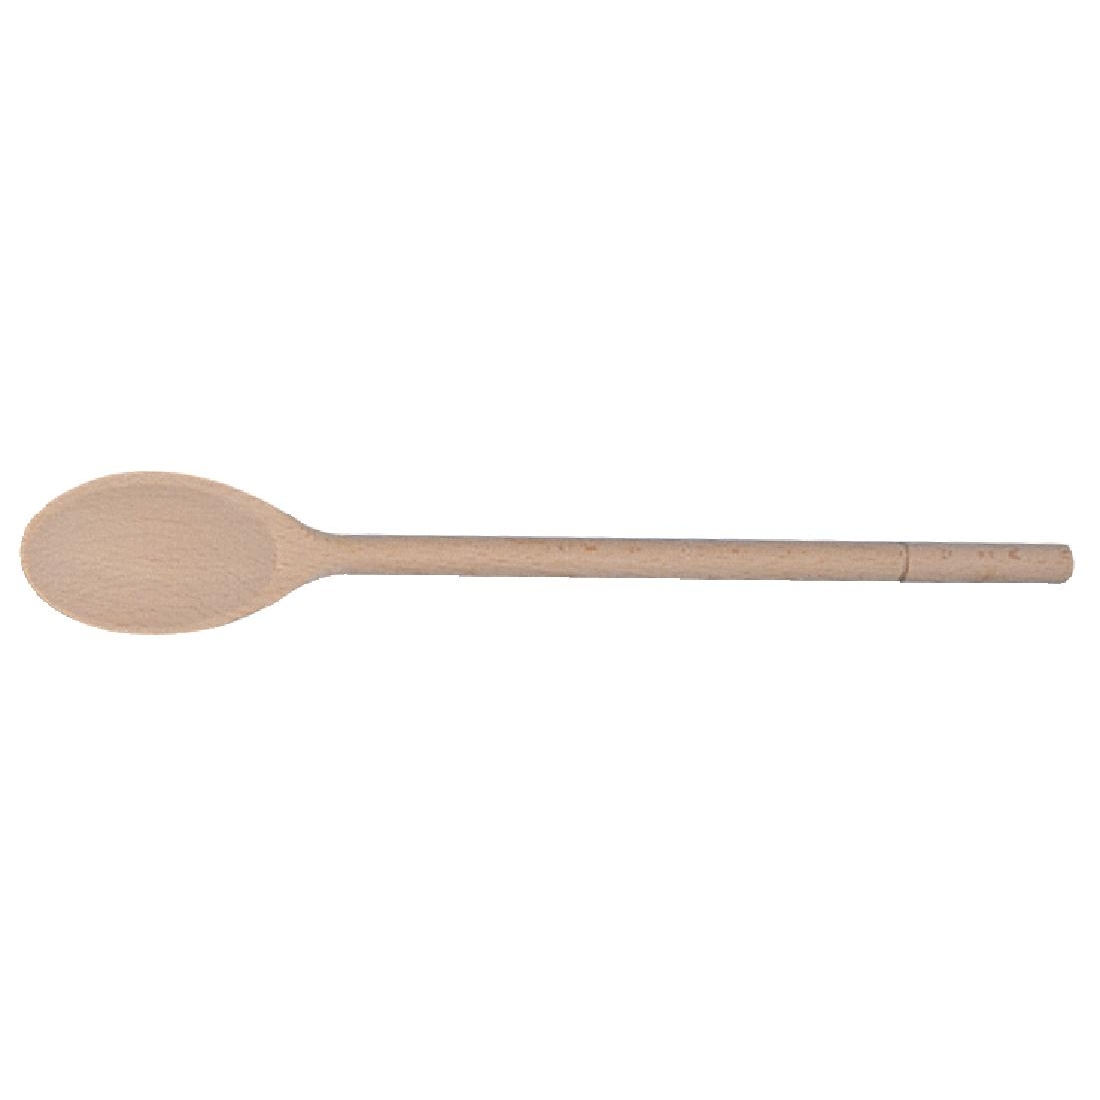 Vogue wooden spoon 12